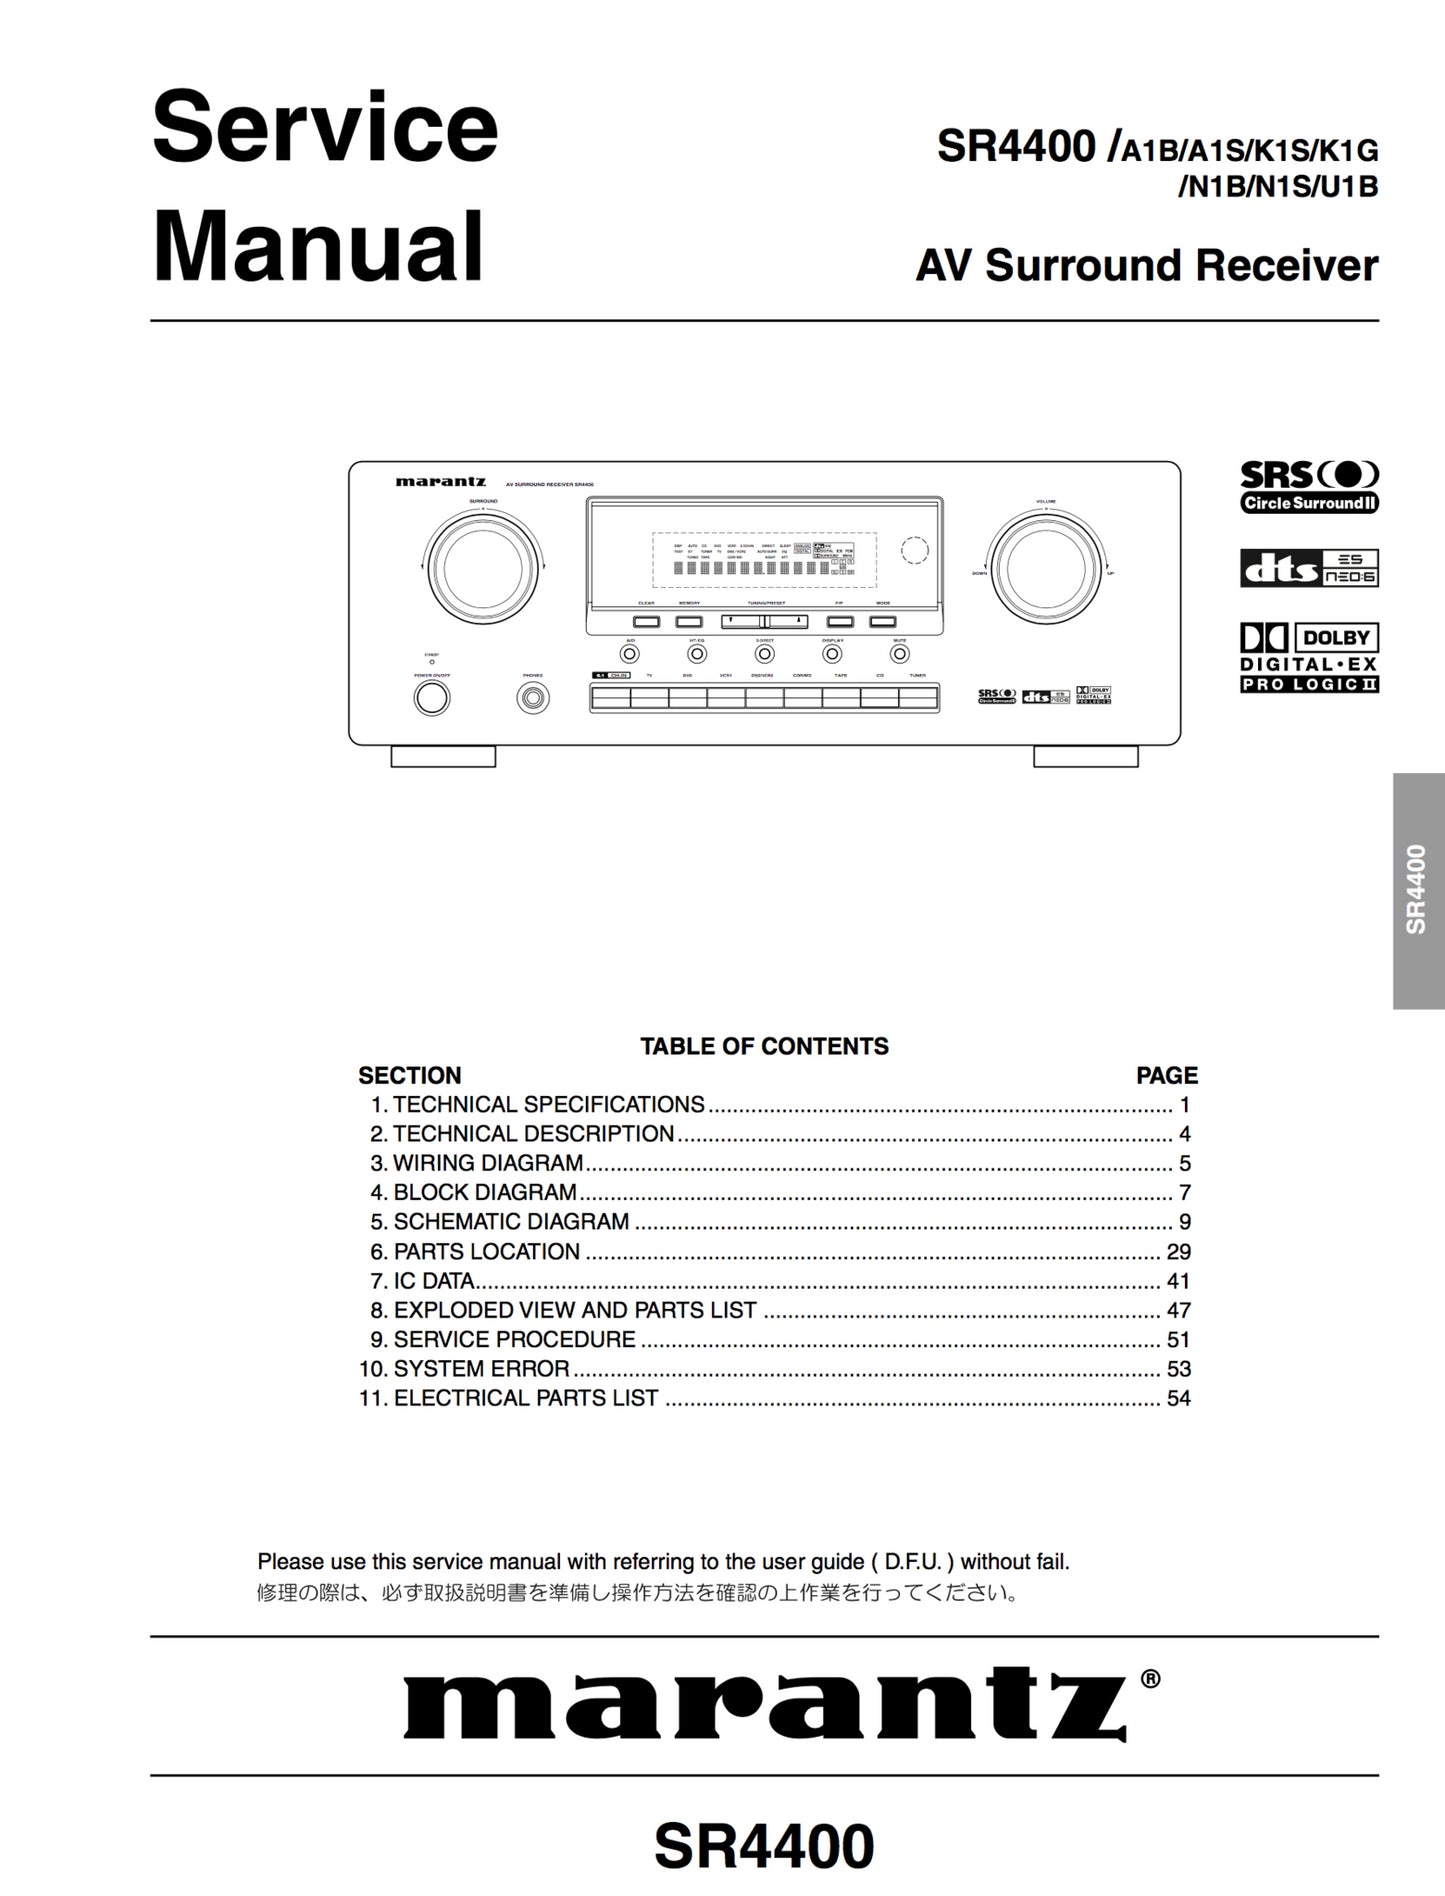 Marantz SR4400 Service Manual Complete - Spared Parts UK